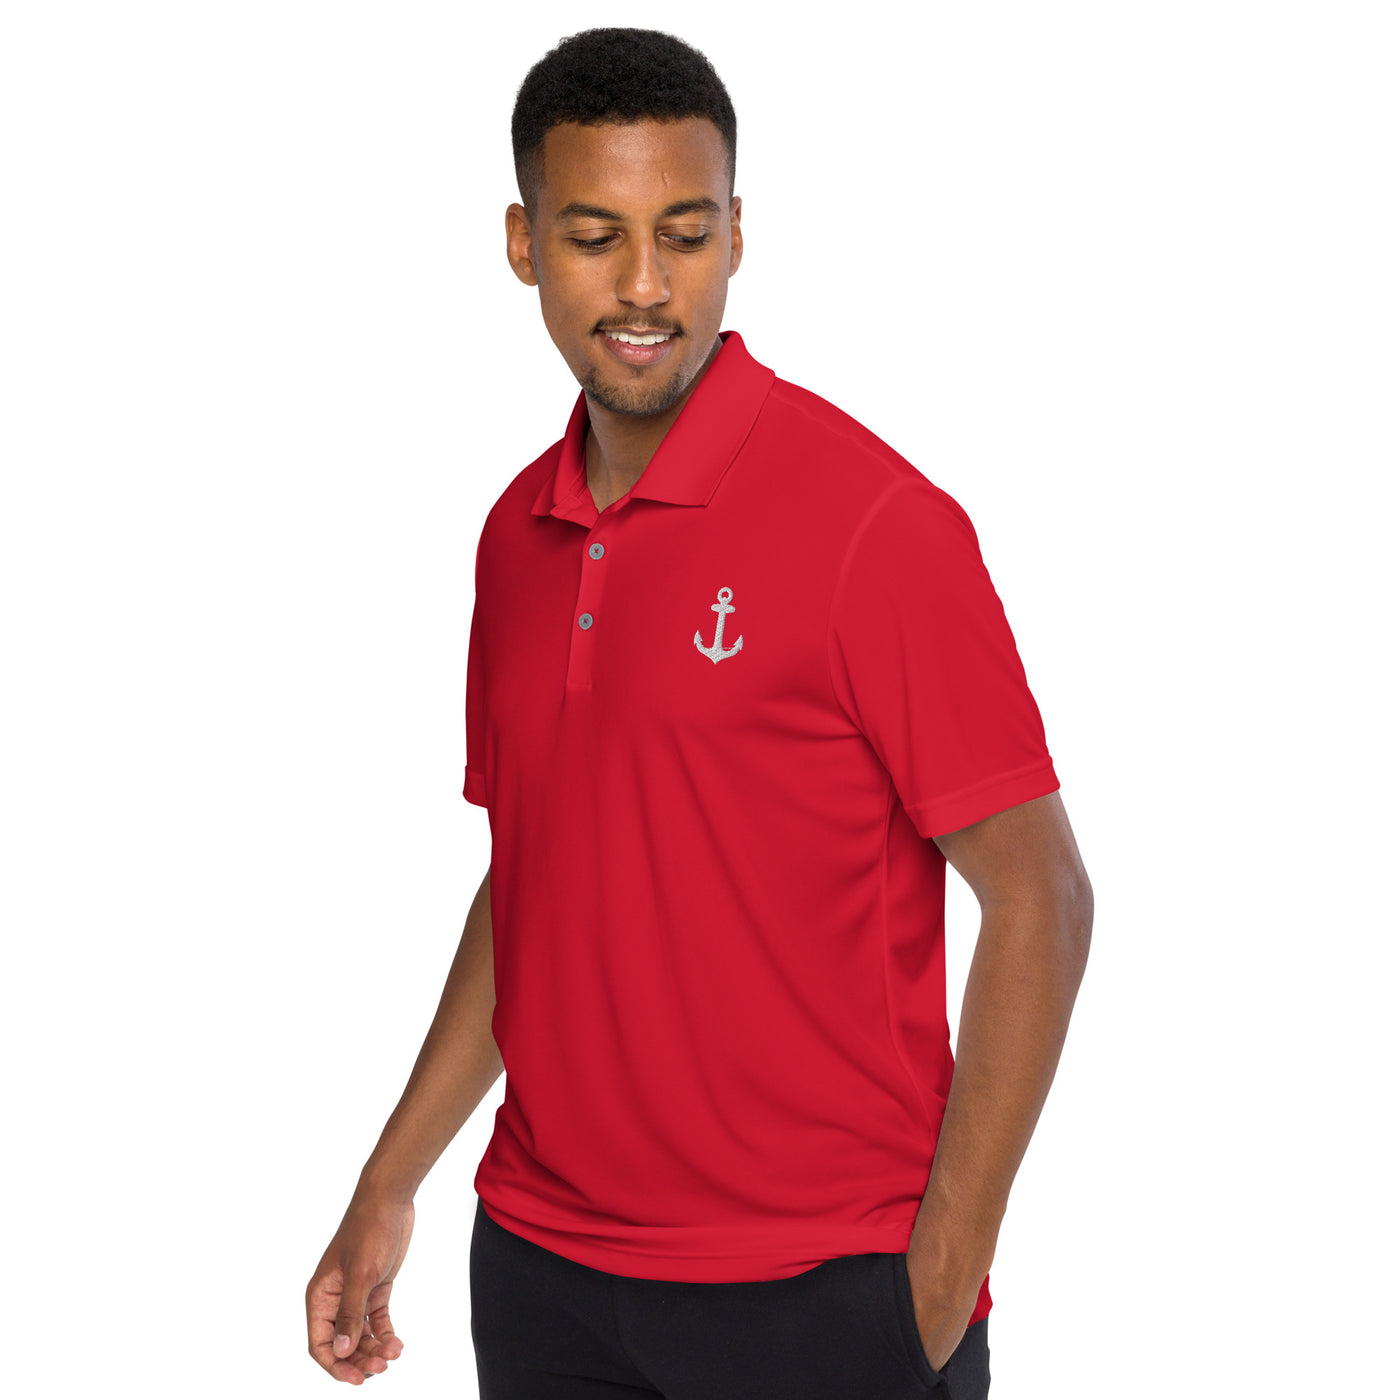 Anchor Adidas Performance Polo Shirt - Red